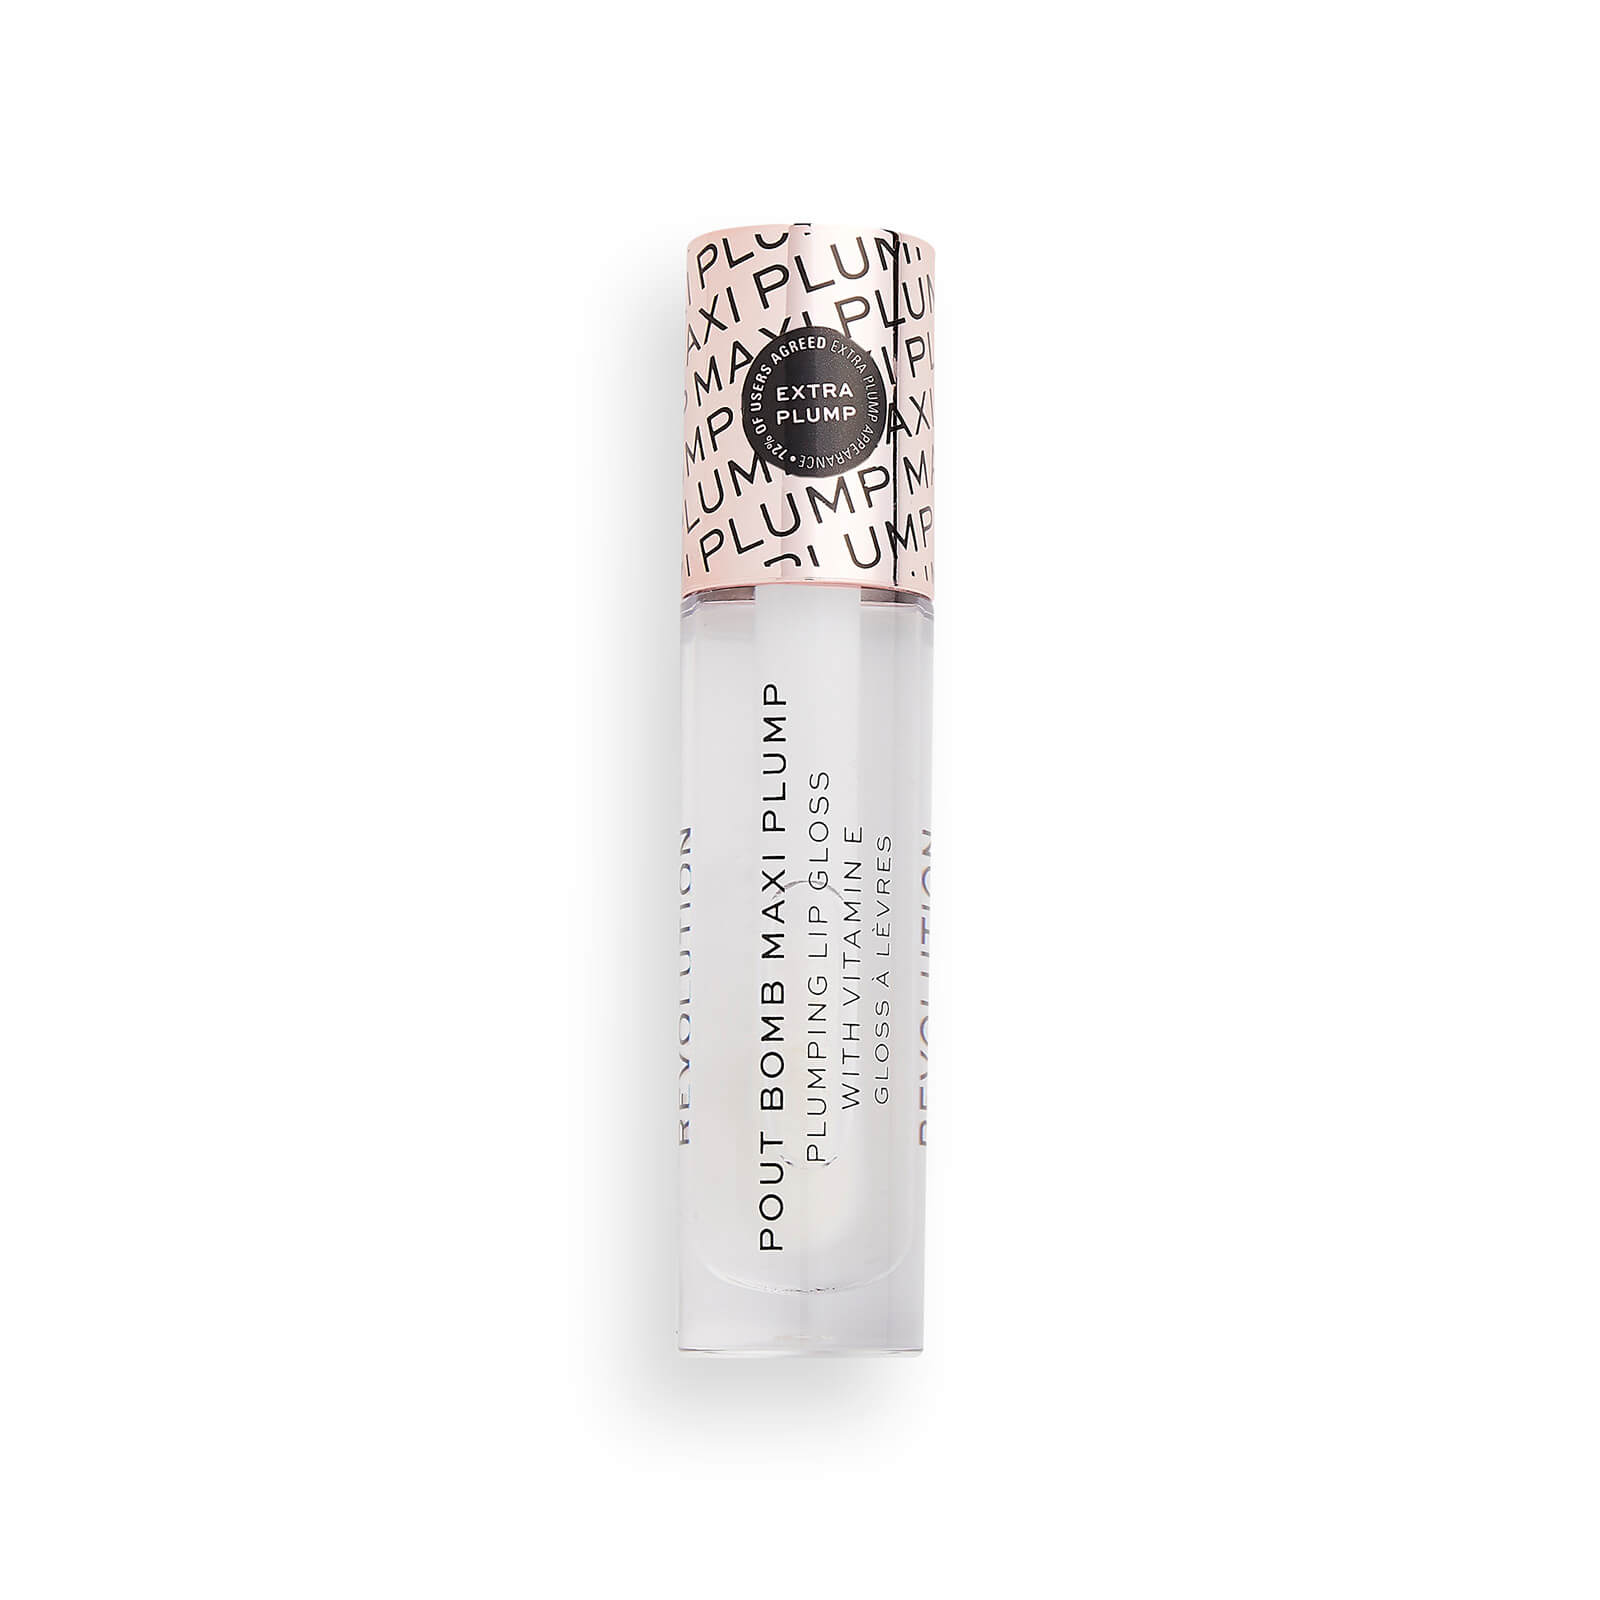 Makeup Revolution Pout Bomb Maxi Plump Lip Gloss 8.5ml (Various Shades) - Glaze